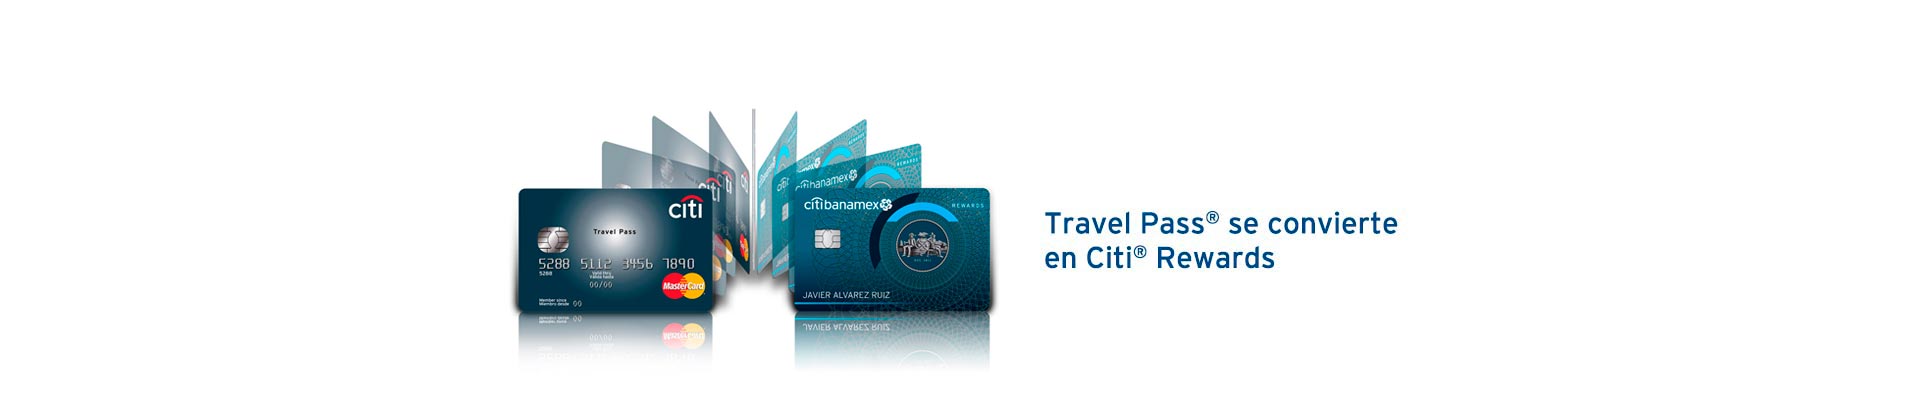 telefono travel pass banamex